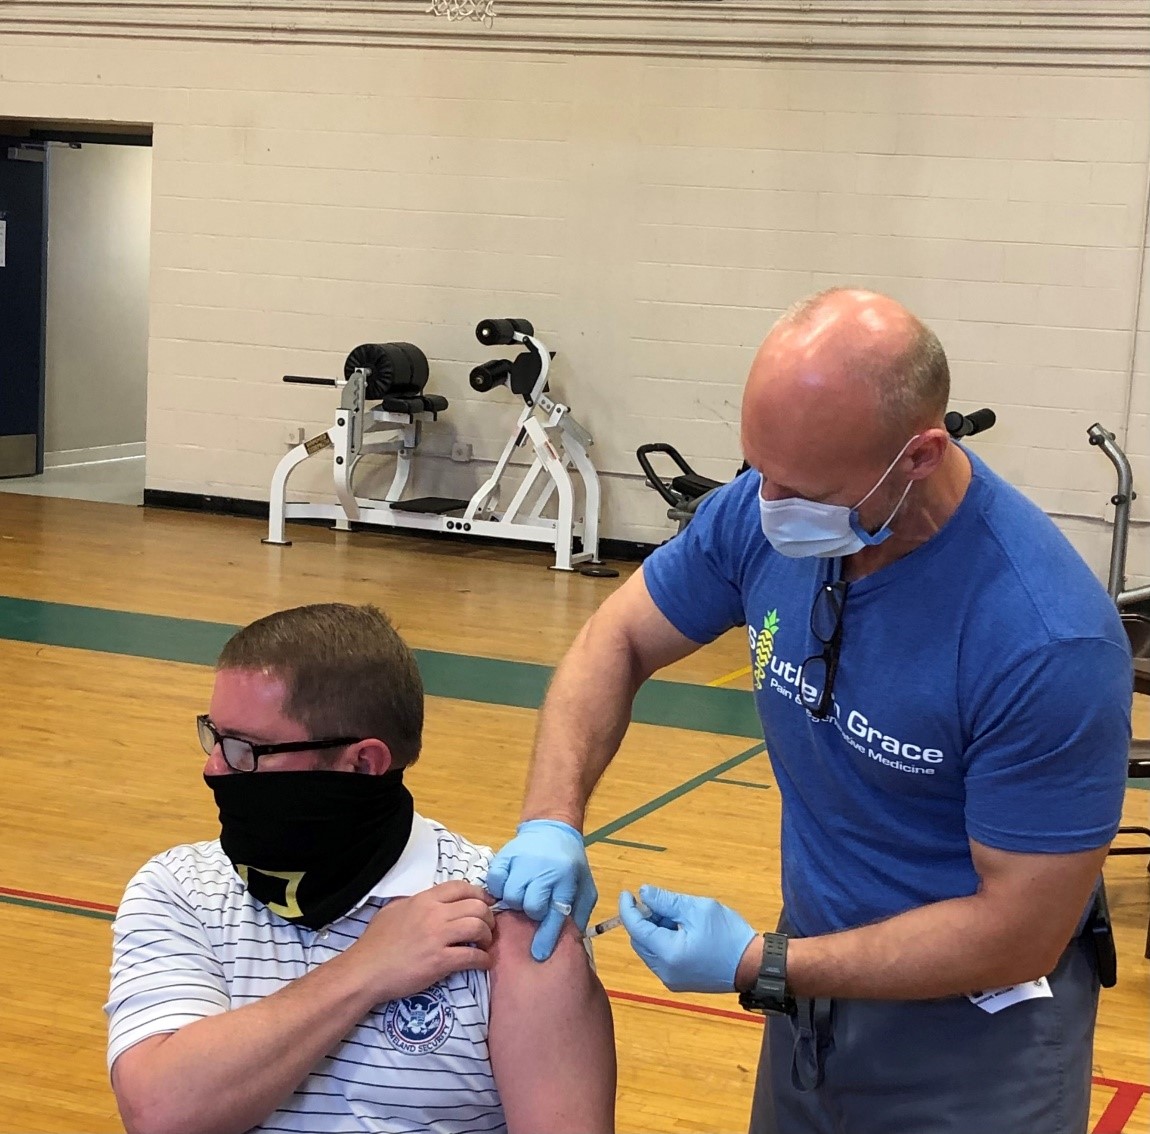 FLETC-Charleston Participating Organization Staff Member being vaccinated on April 1, 2021 at FLETC-Charleston (courtesy photo)